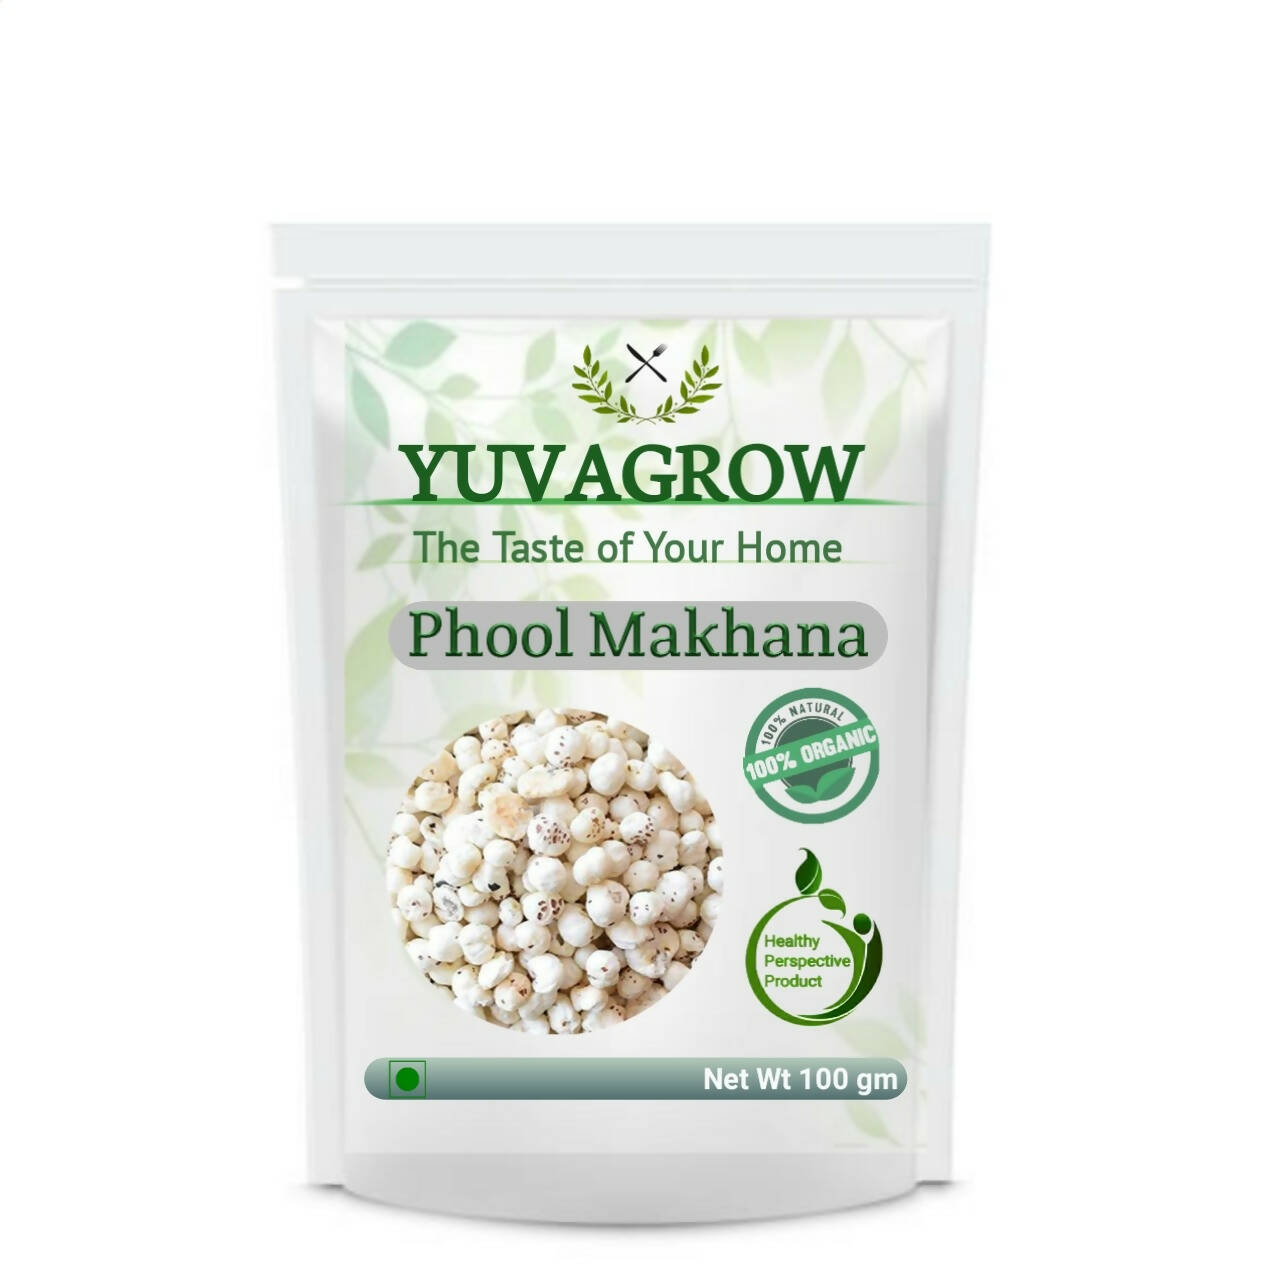 Yuvagrow Phool Makhana - buy in USA, Australia, Canada